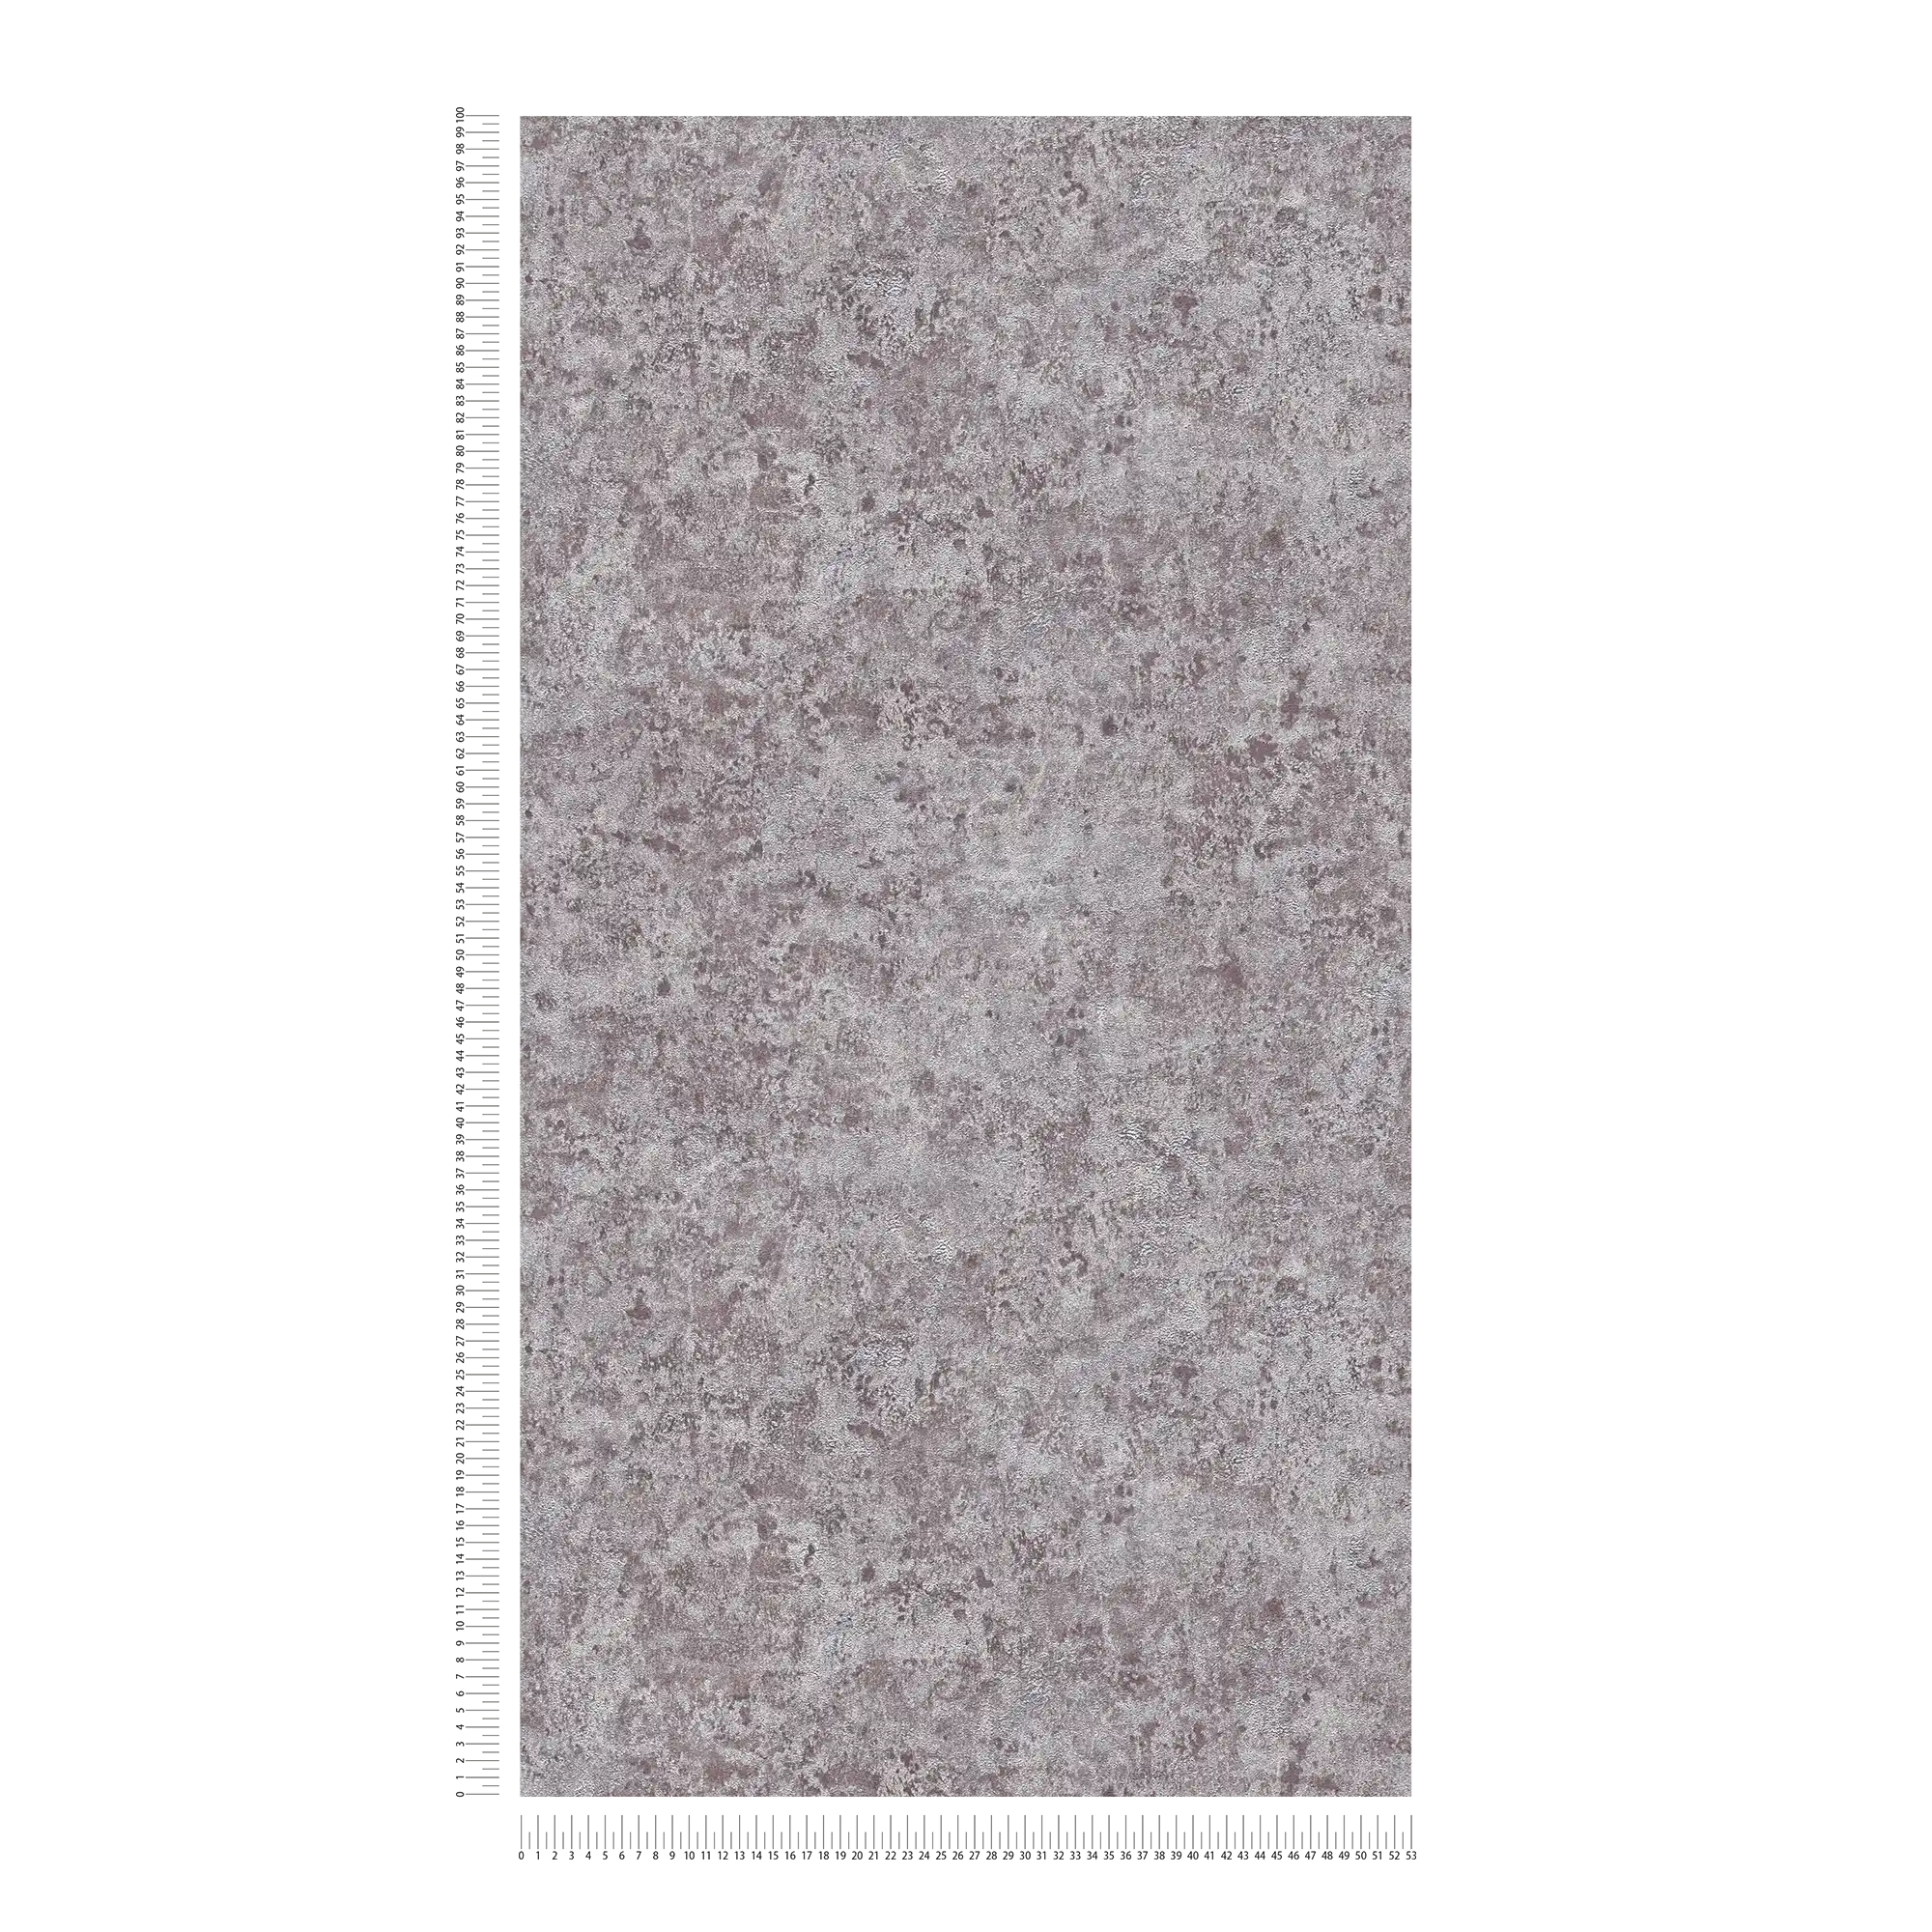             Non-woven wallpaper with shiny metallic effect - grey, silver, brown
        